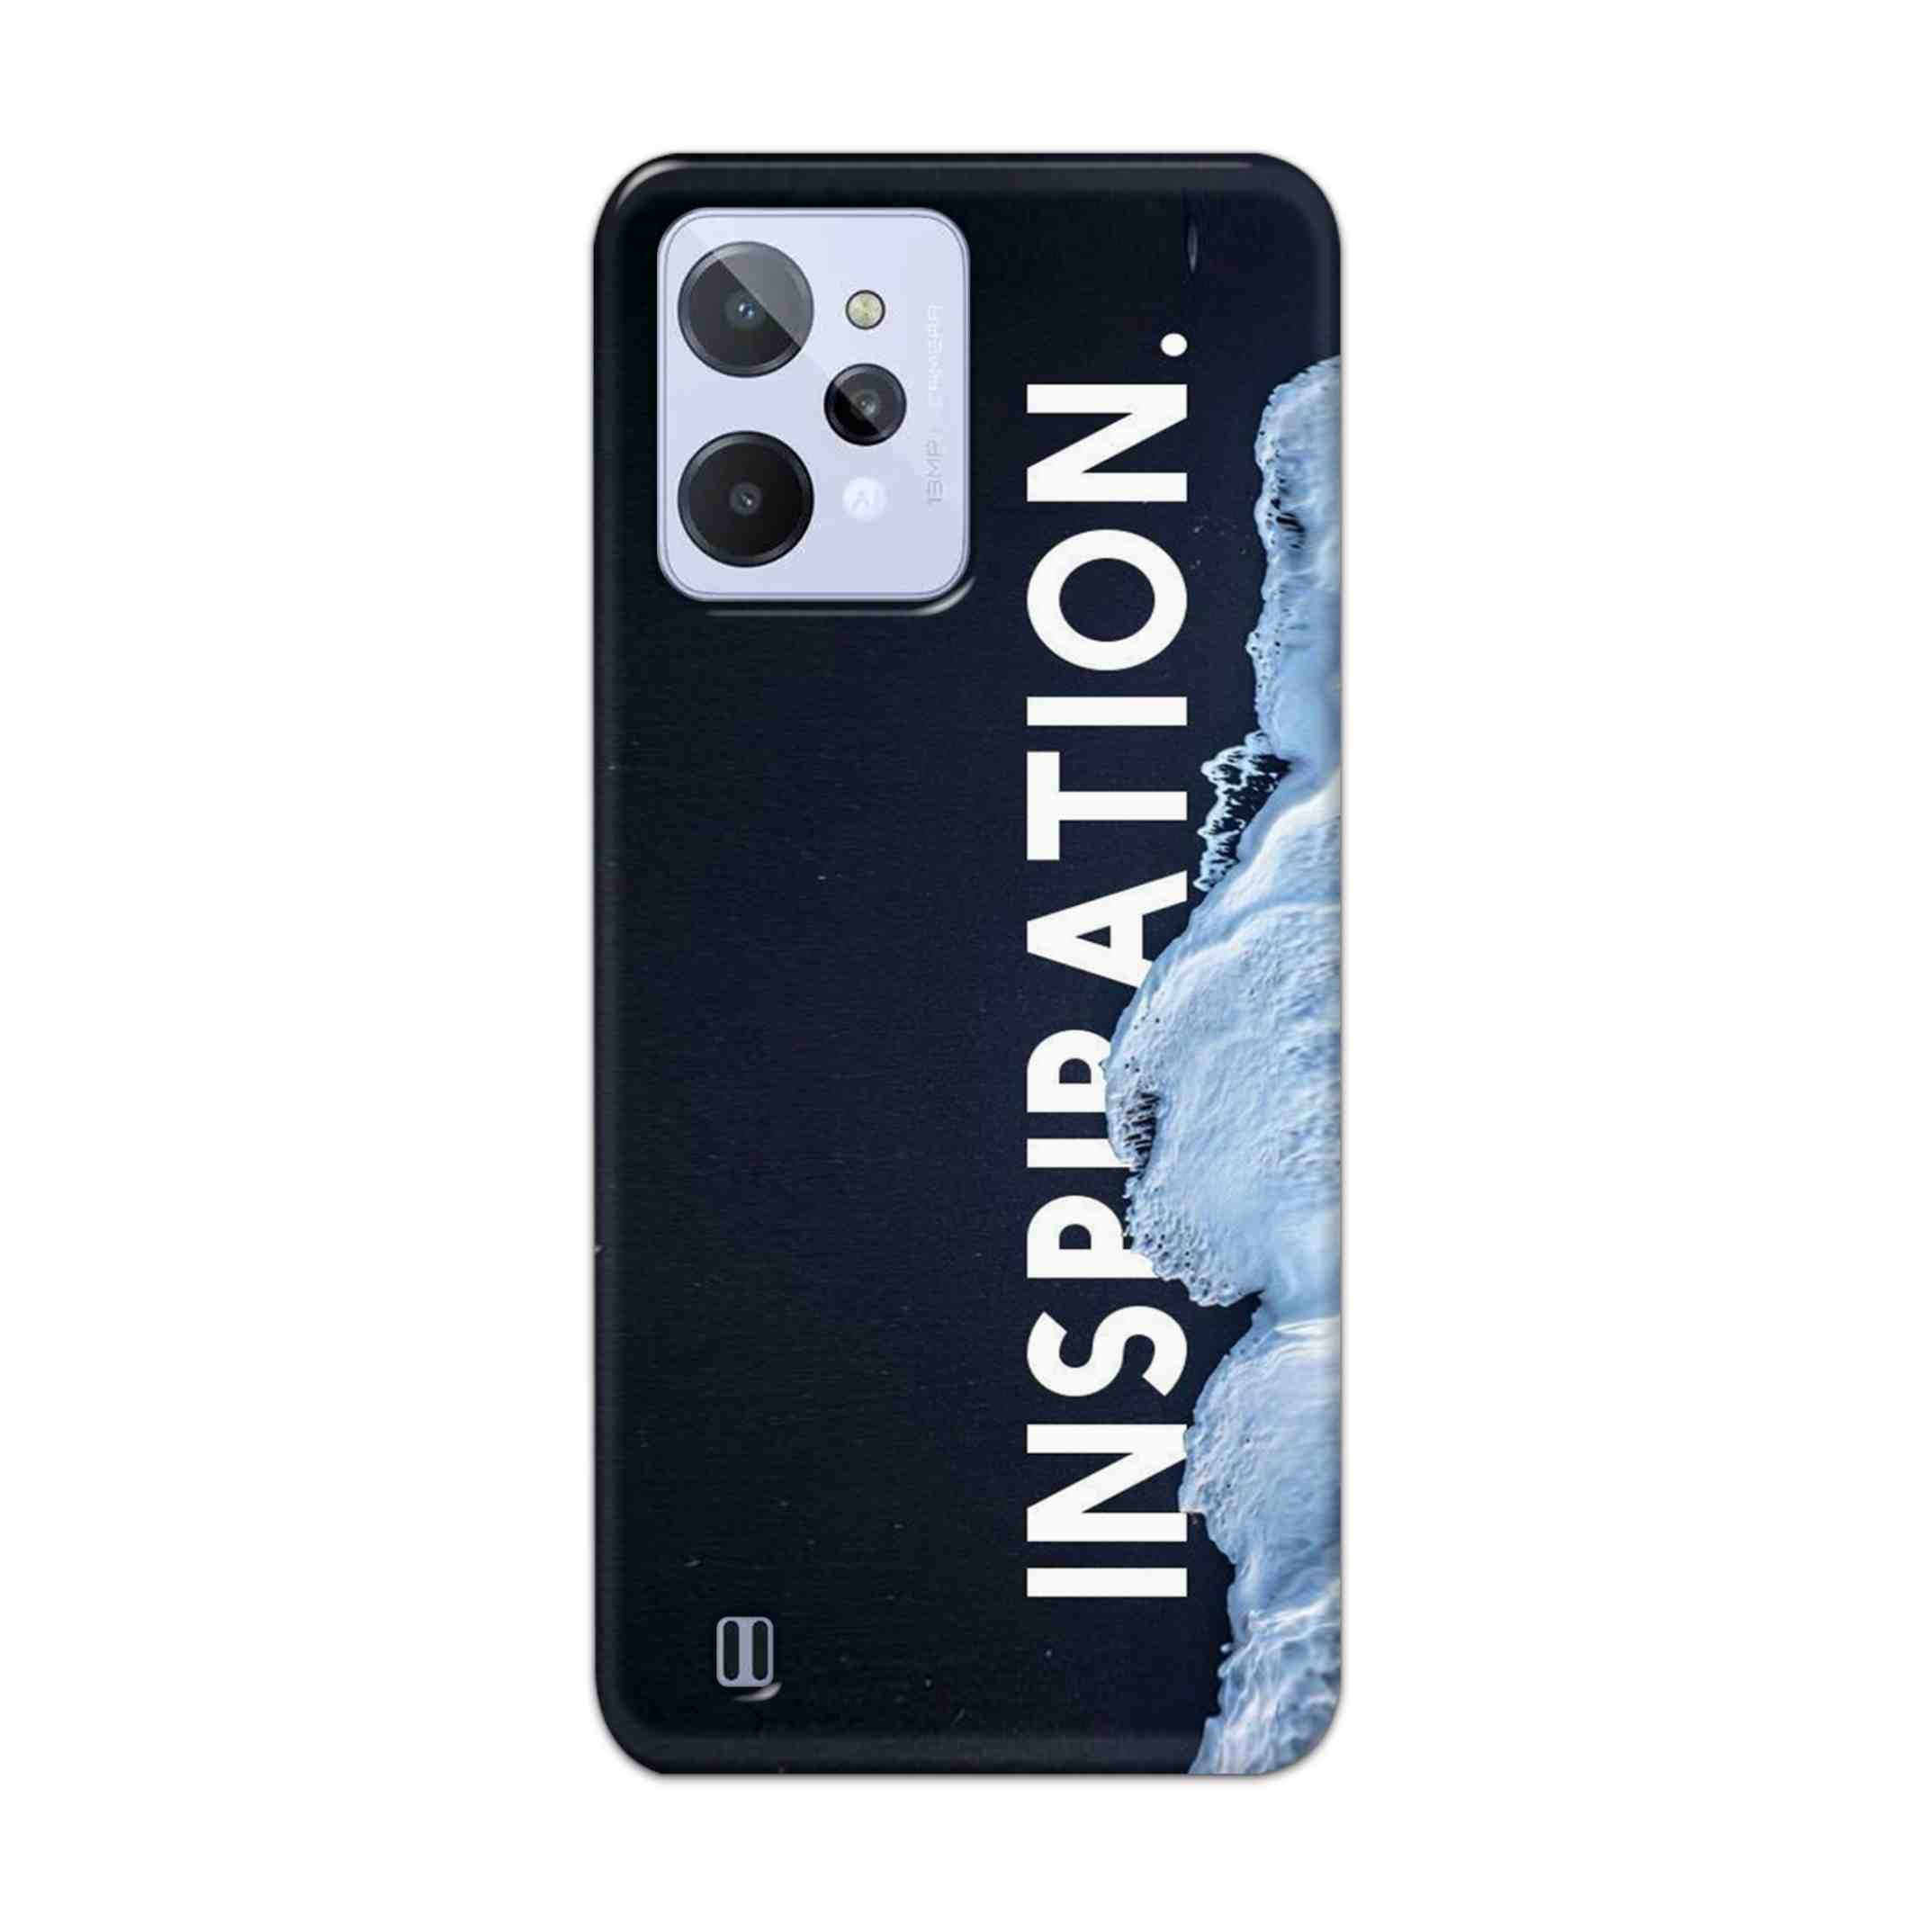 Buy Inspiration Hard Back Mobile Phone Case Cover For Realme C31 Online